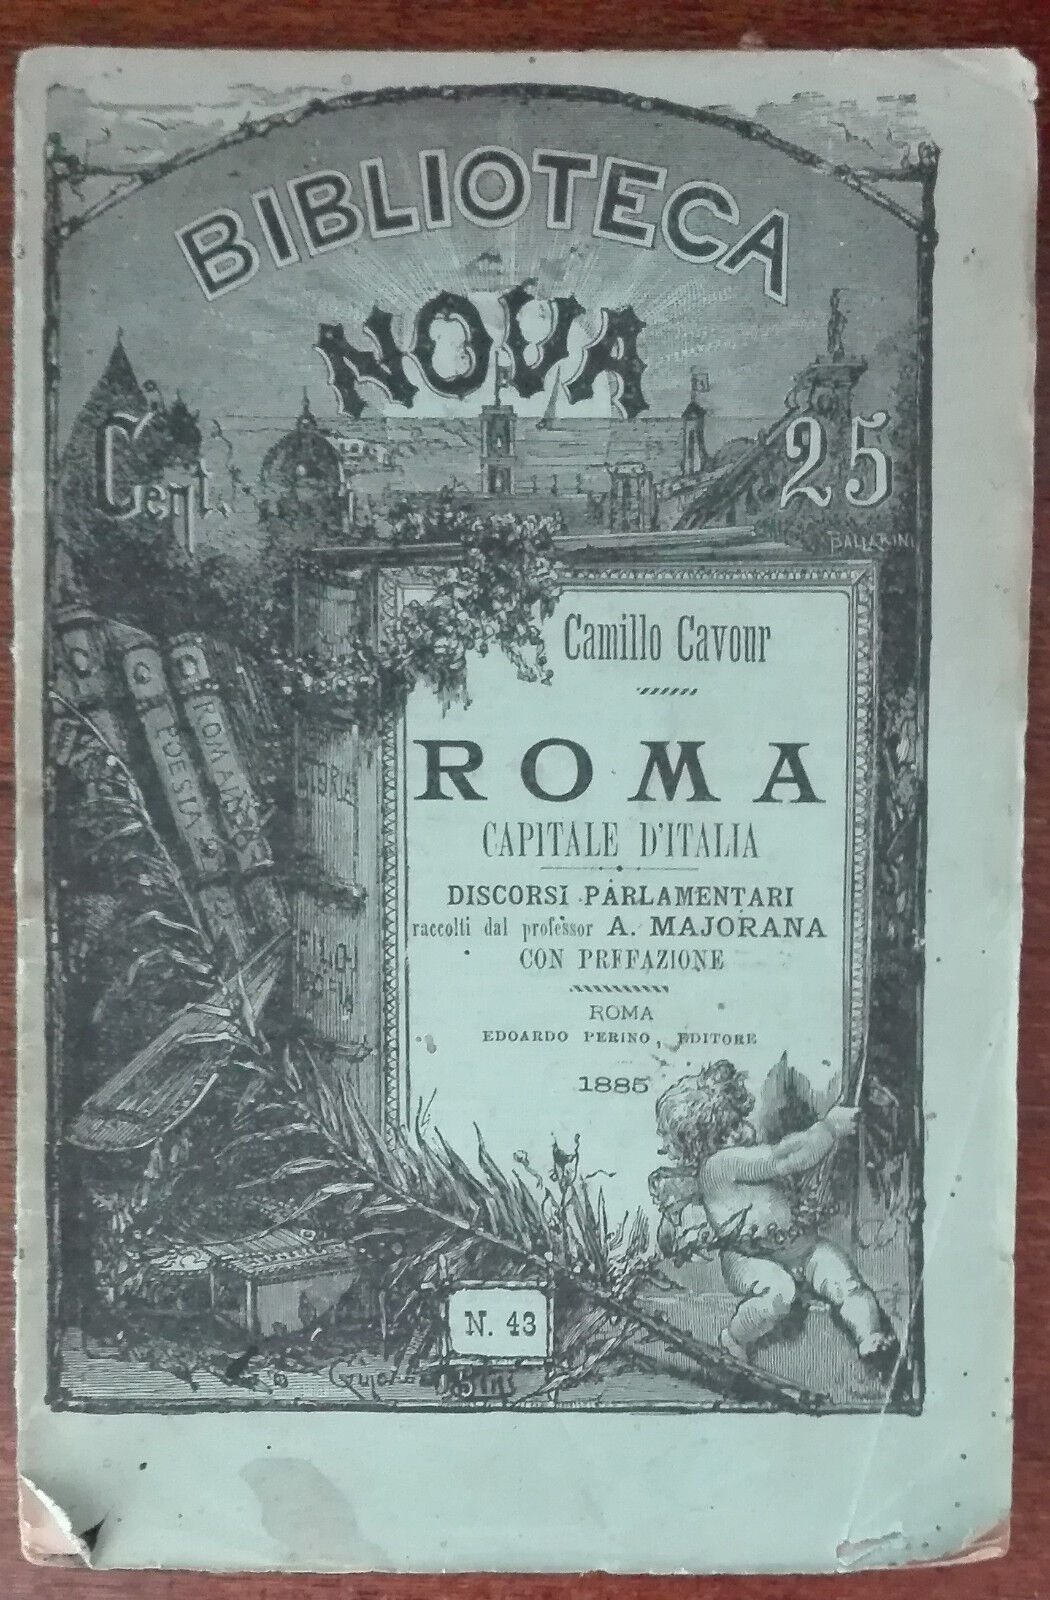 Roma capitale d'Italia - Camillo Cavour - Biblioteca nova, 1885 - A